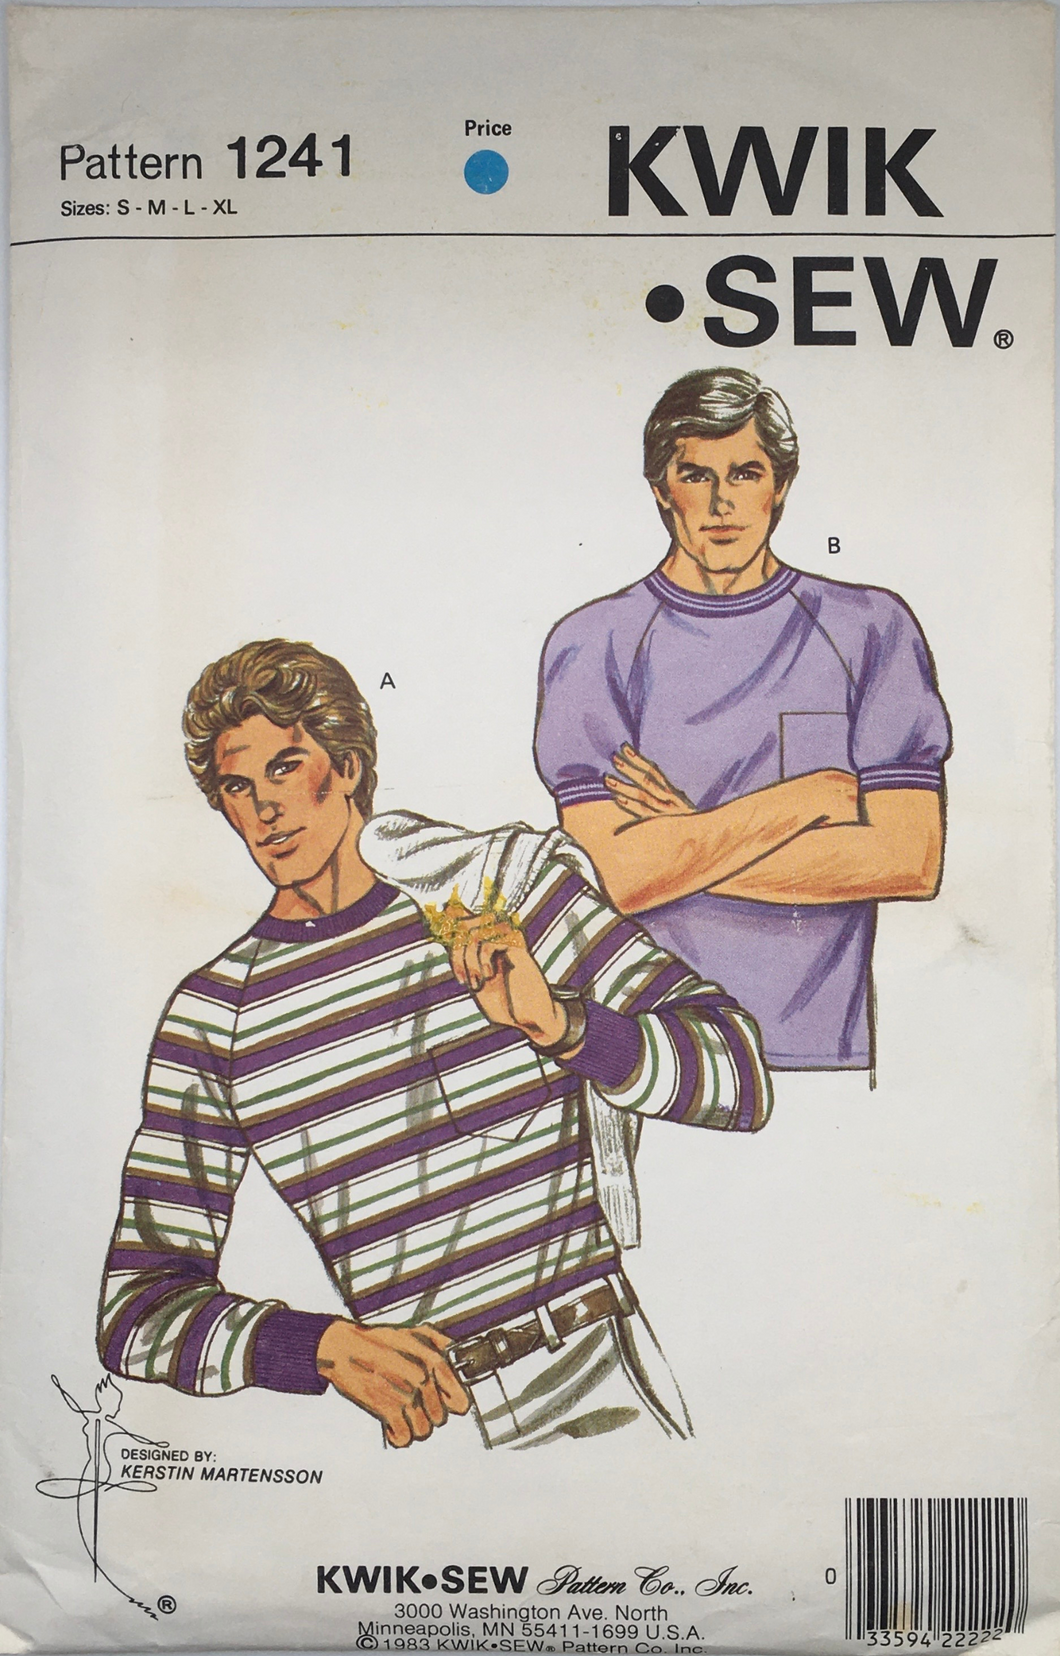 Vintage Sewing Pattern: Kwik Sew 1241